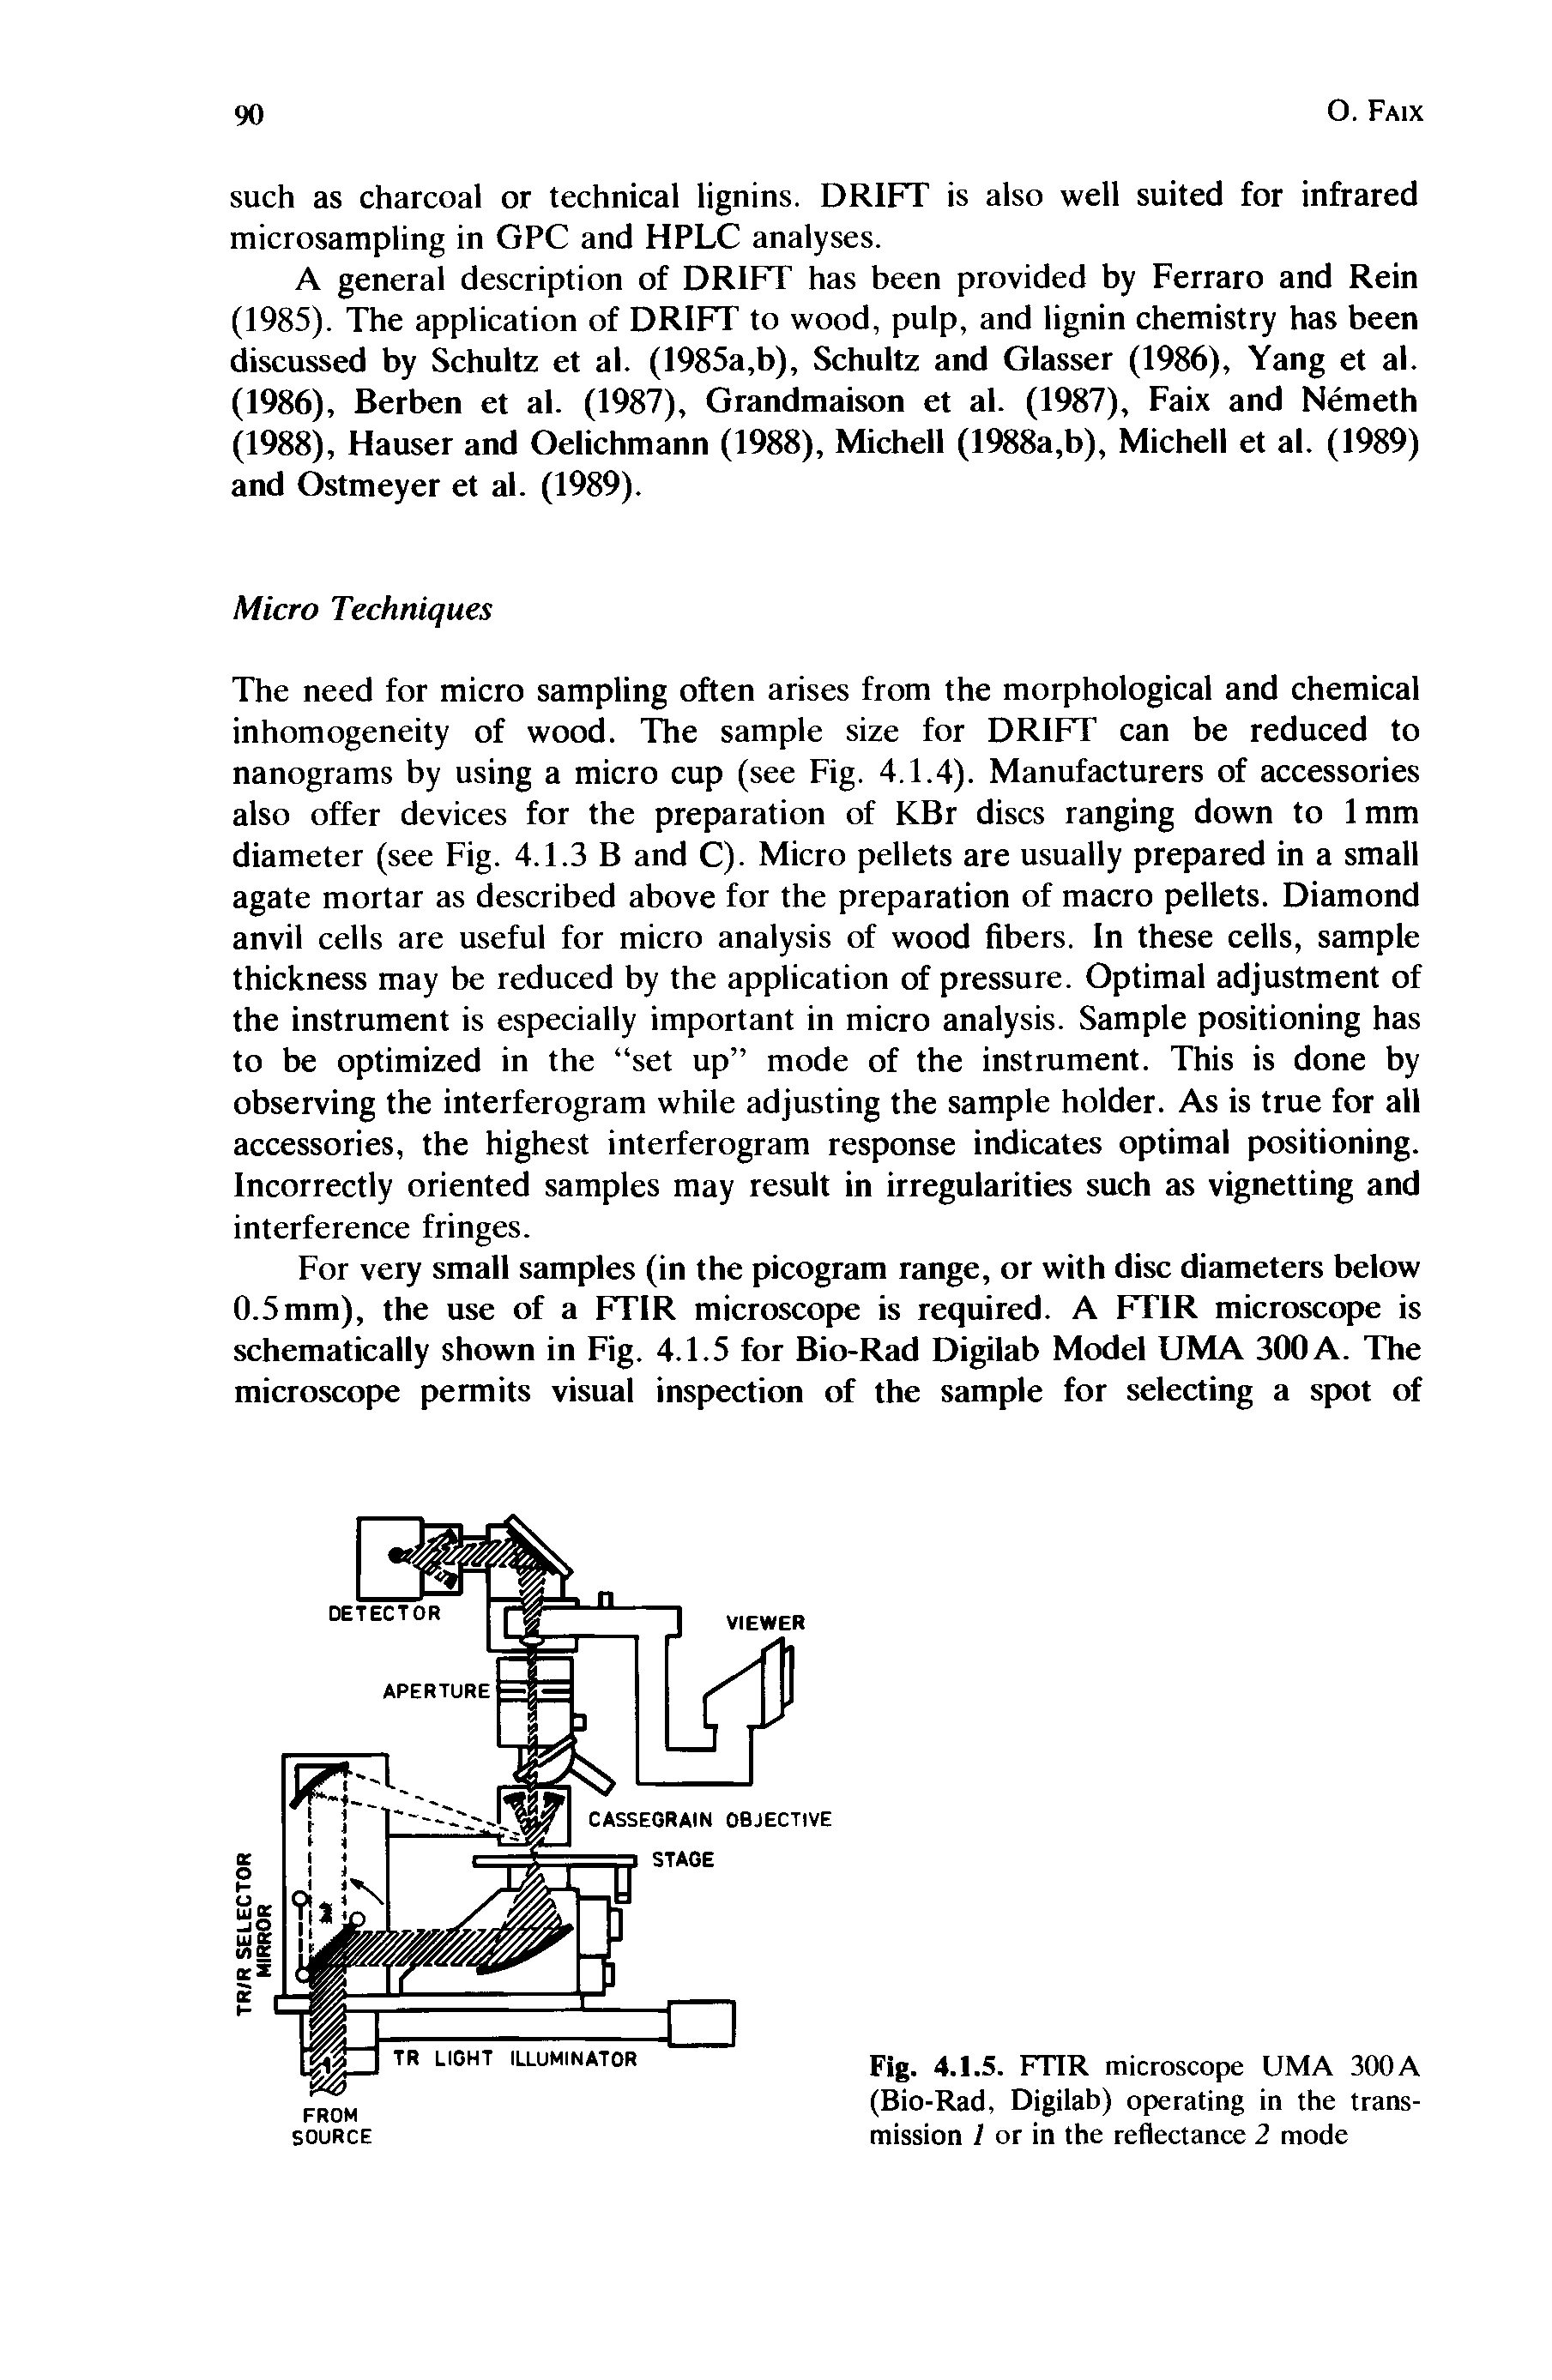 Fig. 4.1.5. FTIR microscope UMA 300 A (Bio-Rad, Digilab) operating in the transmission / or in the reflectance 2 mode...